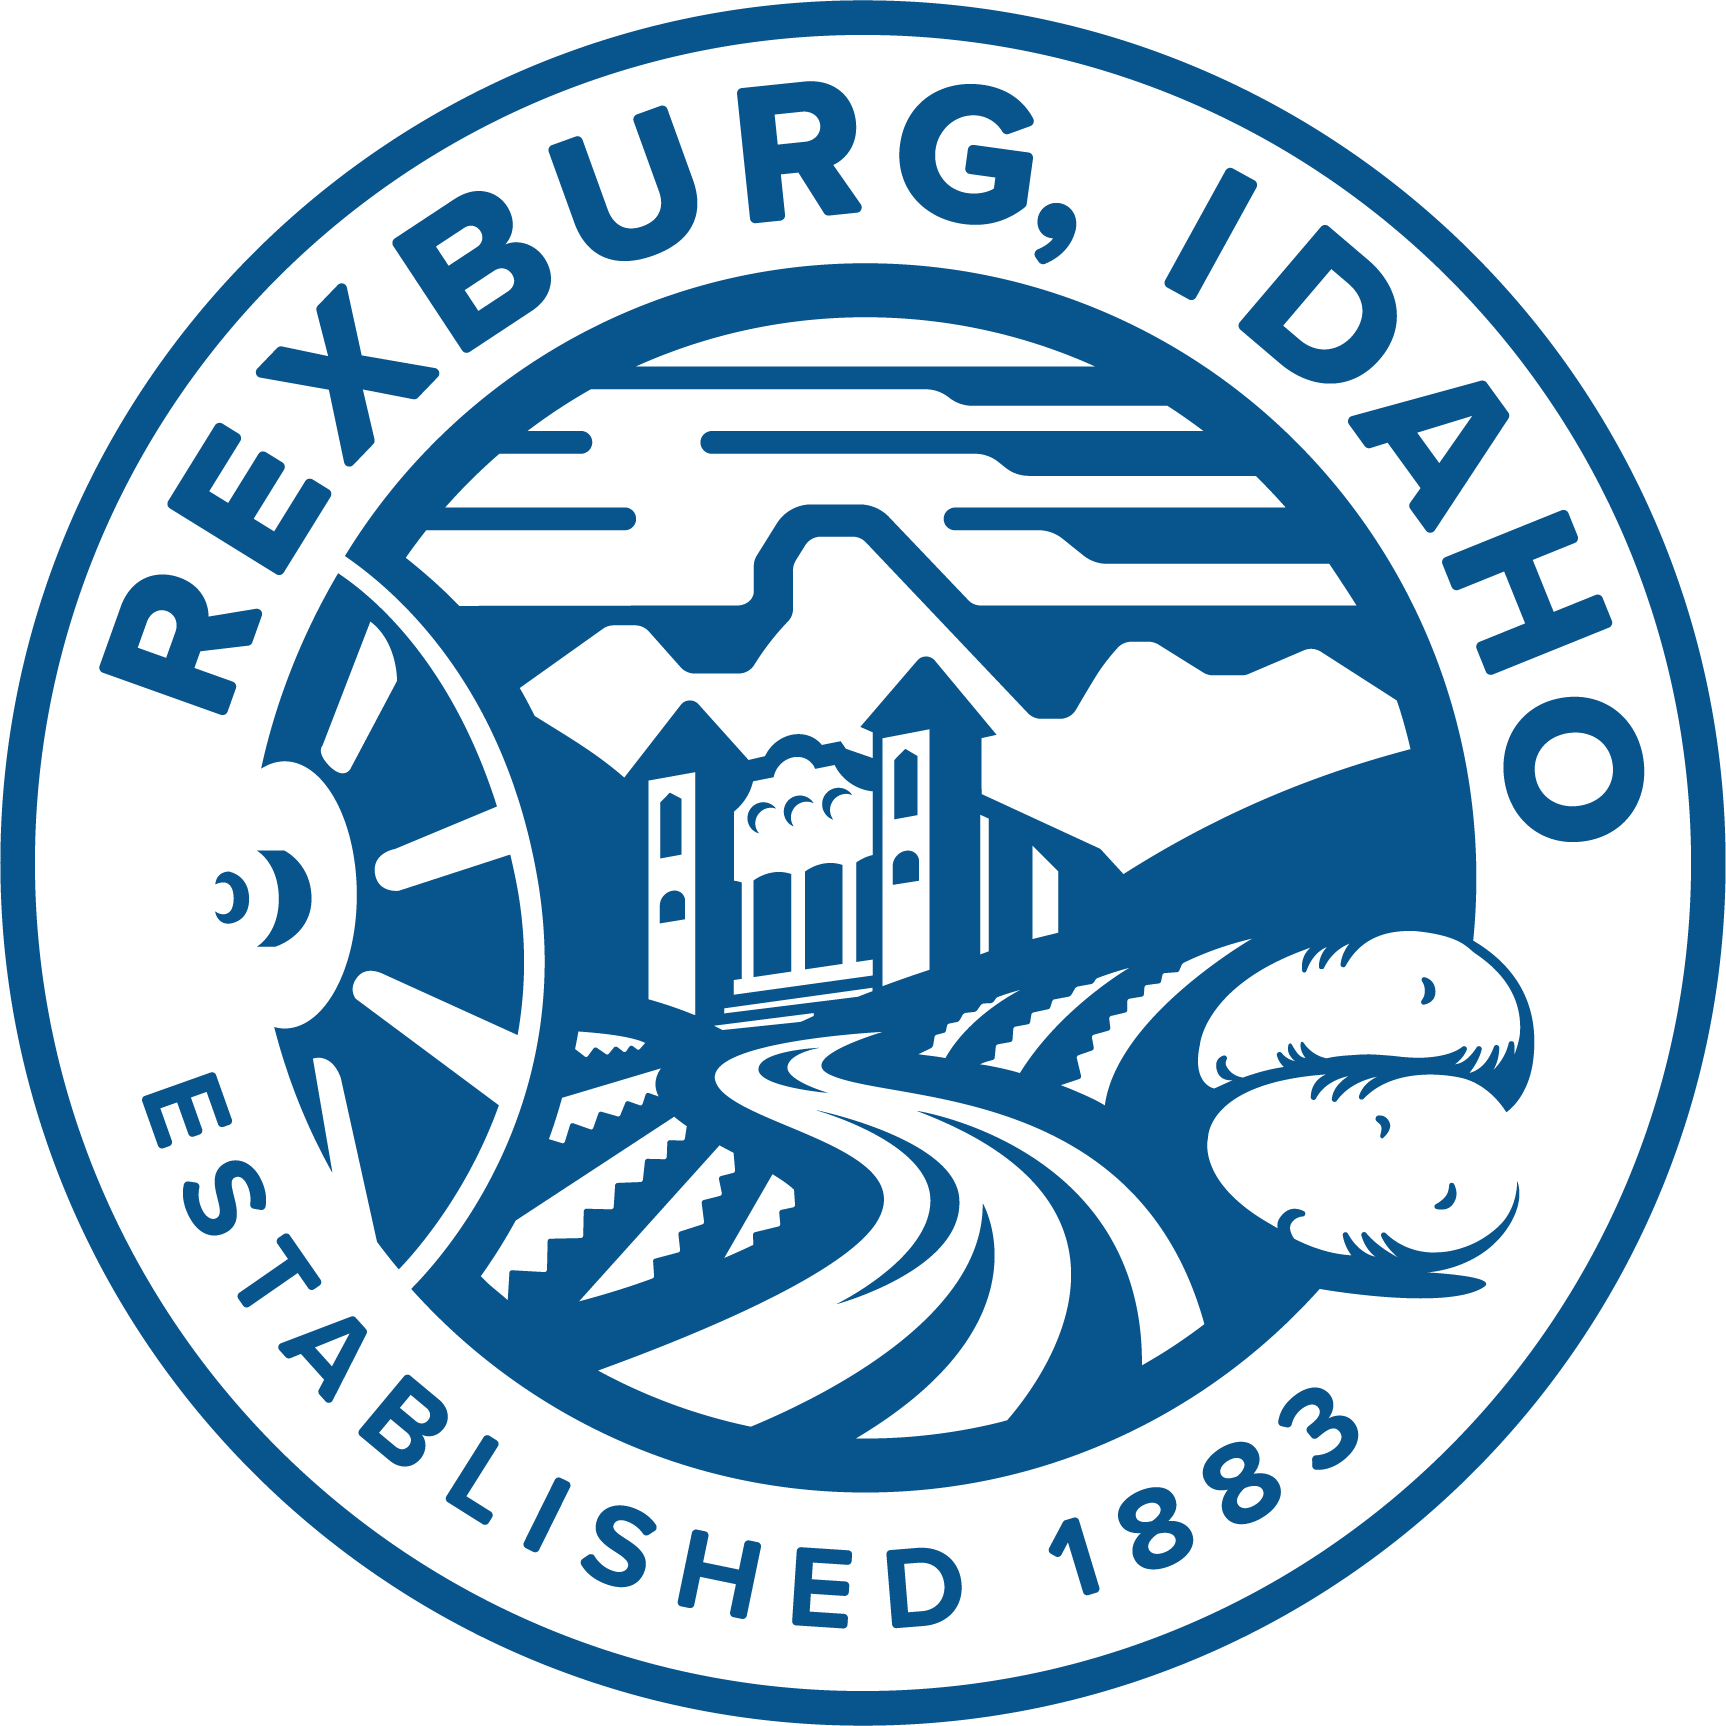 Rexburg seal